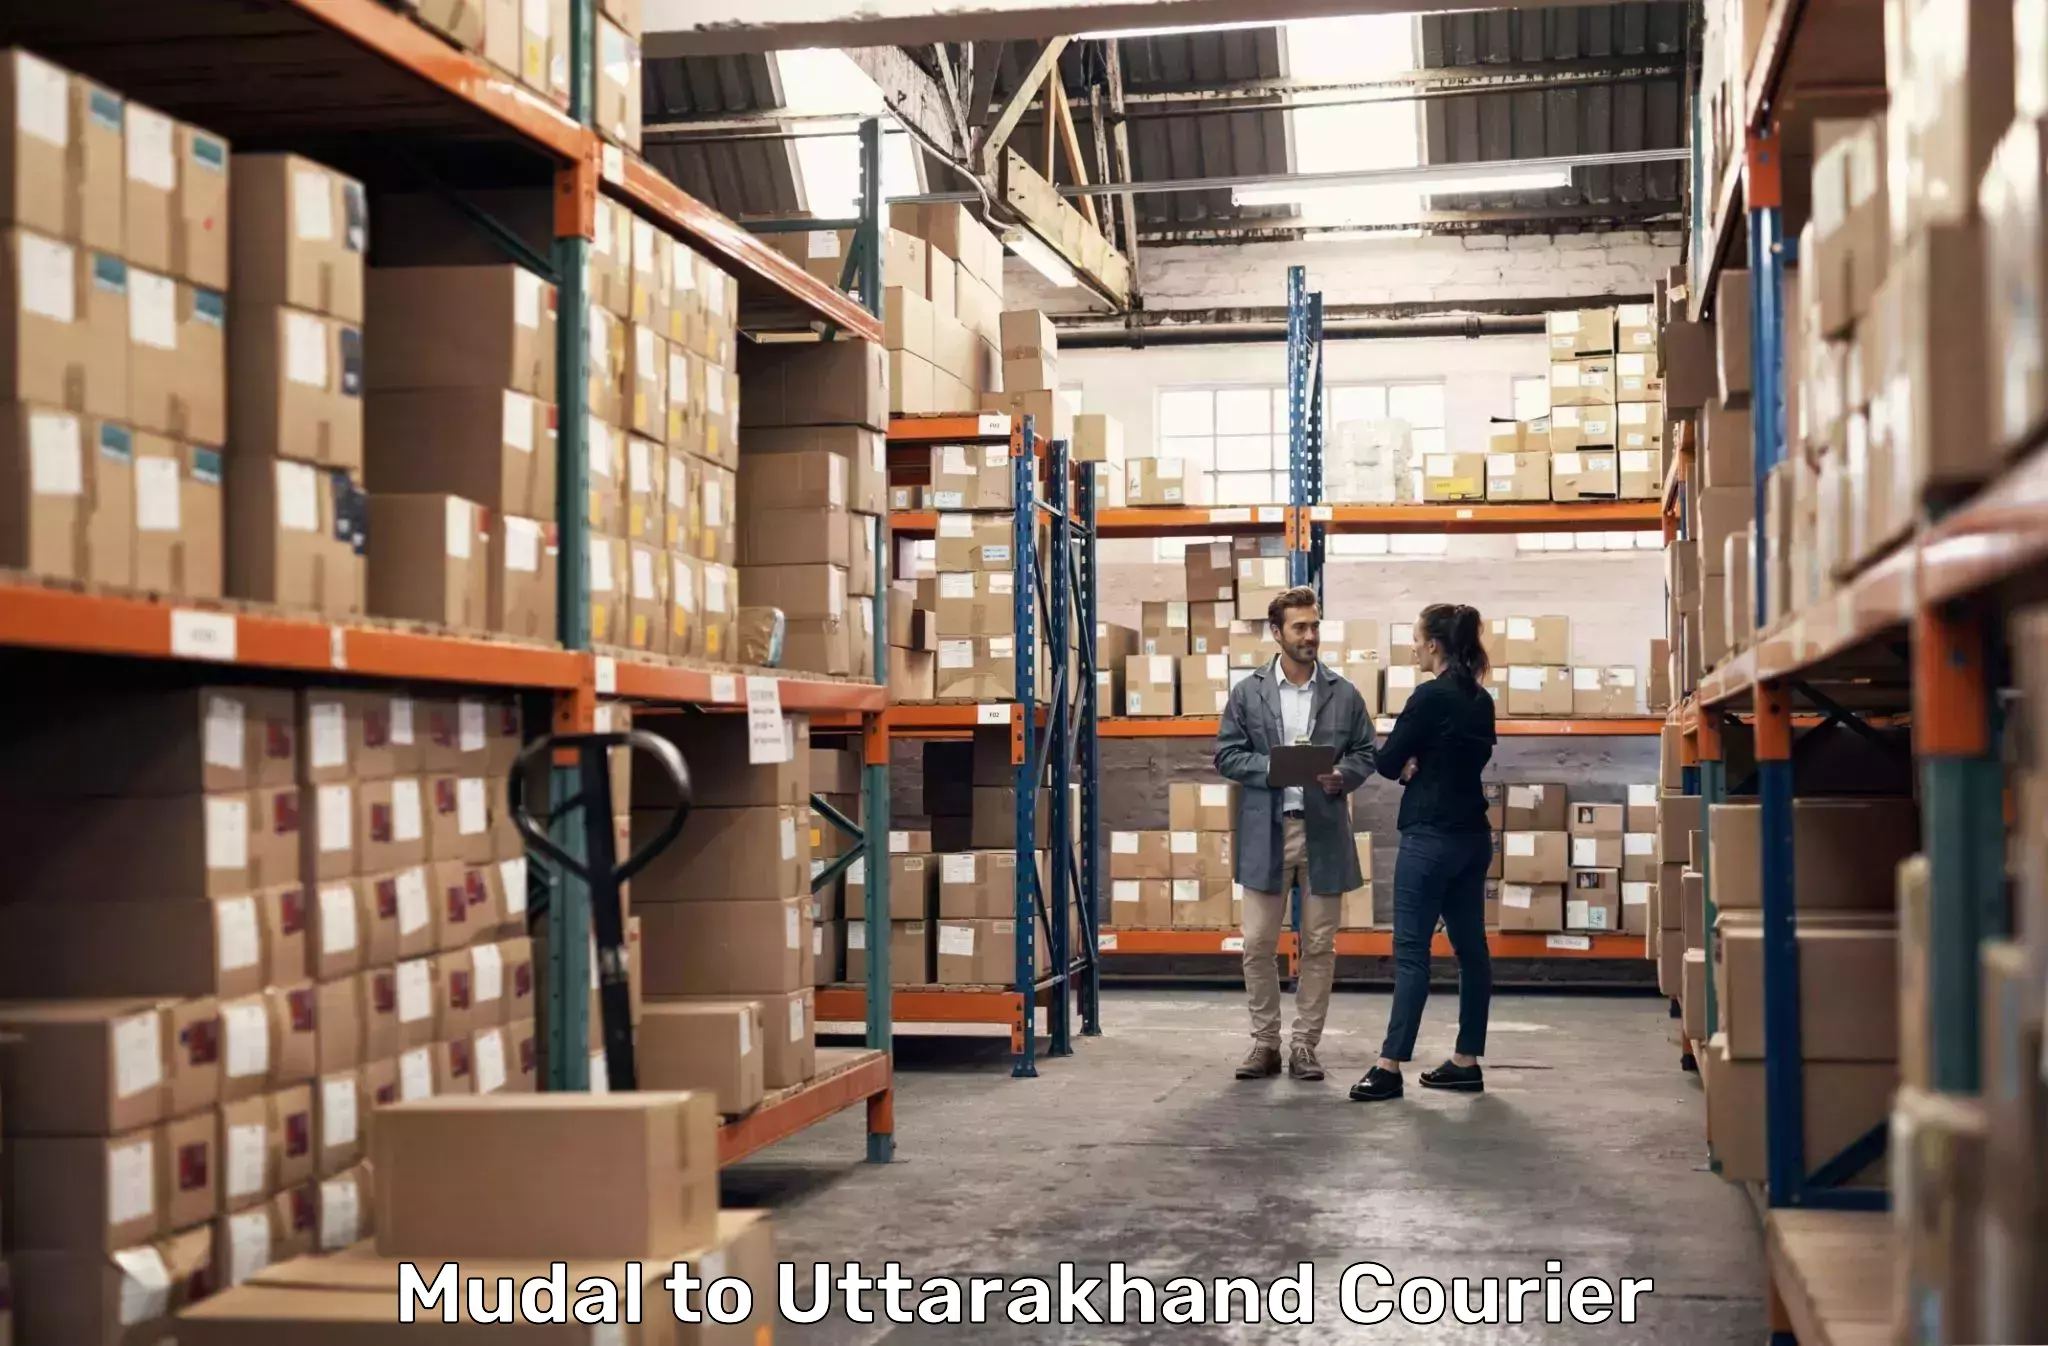 Courier service comparison Mudal to Rishikesh